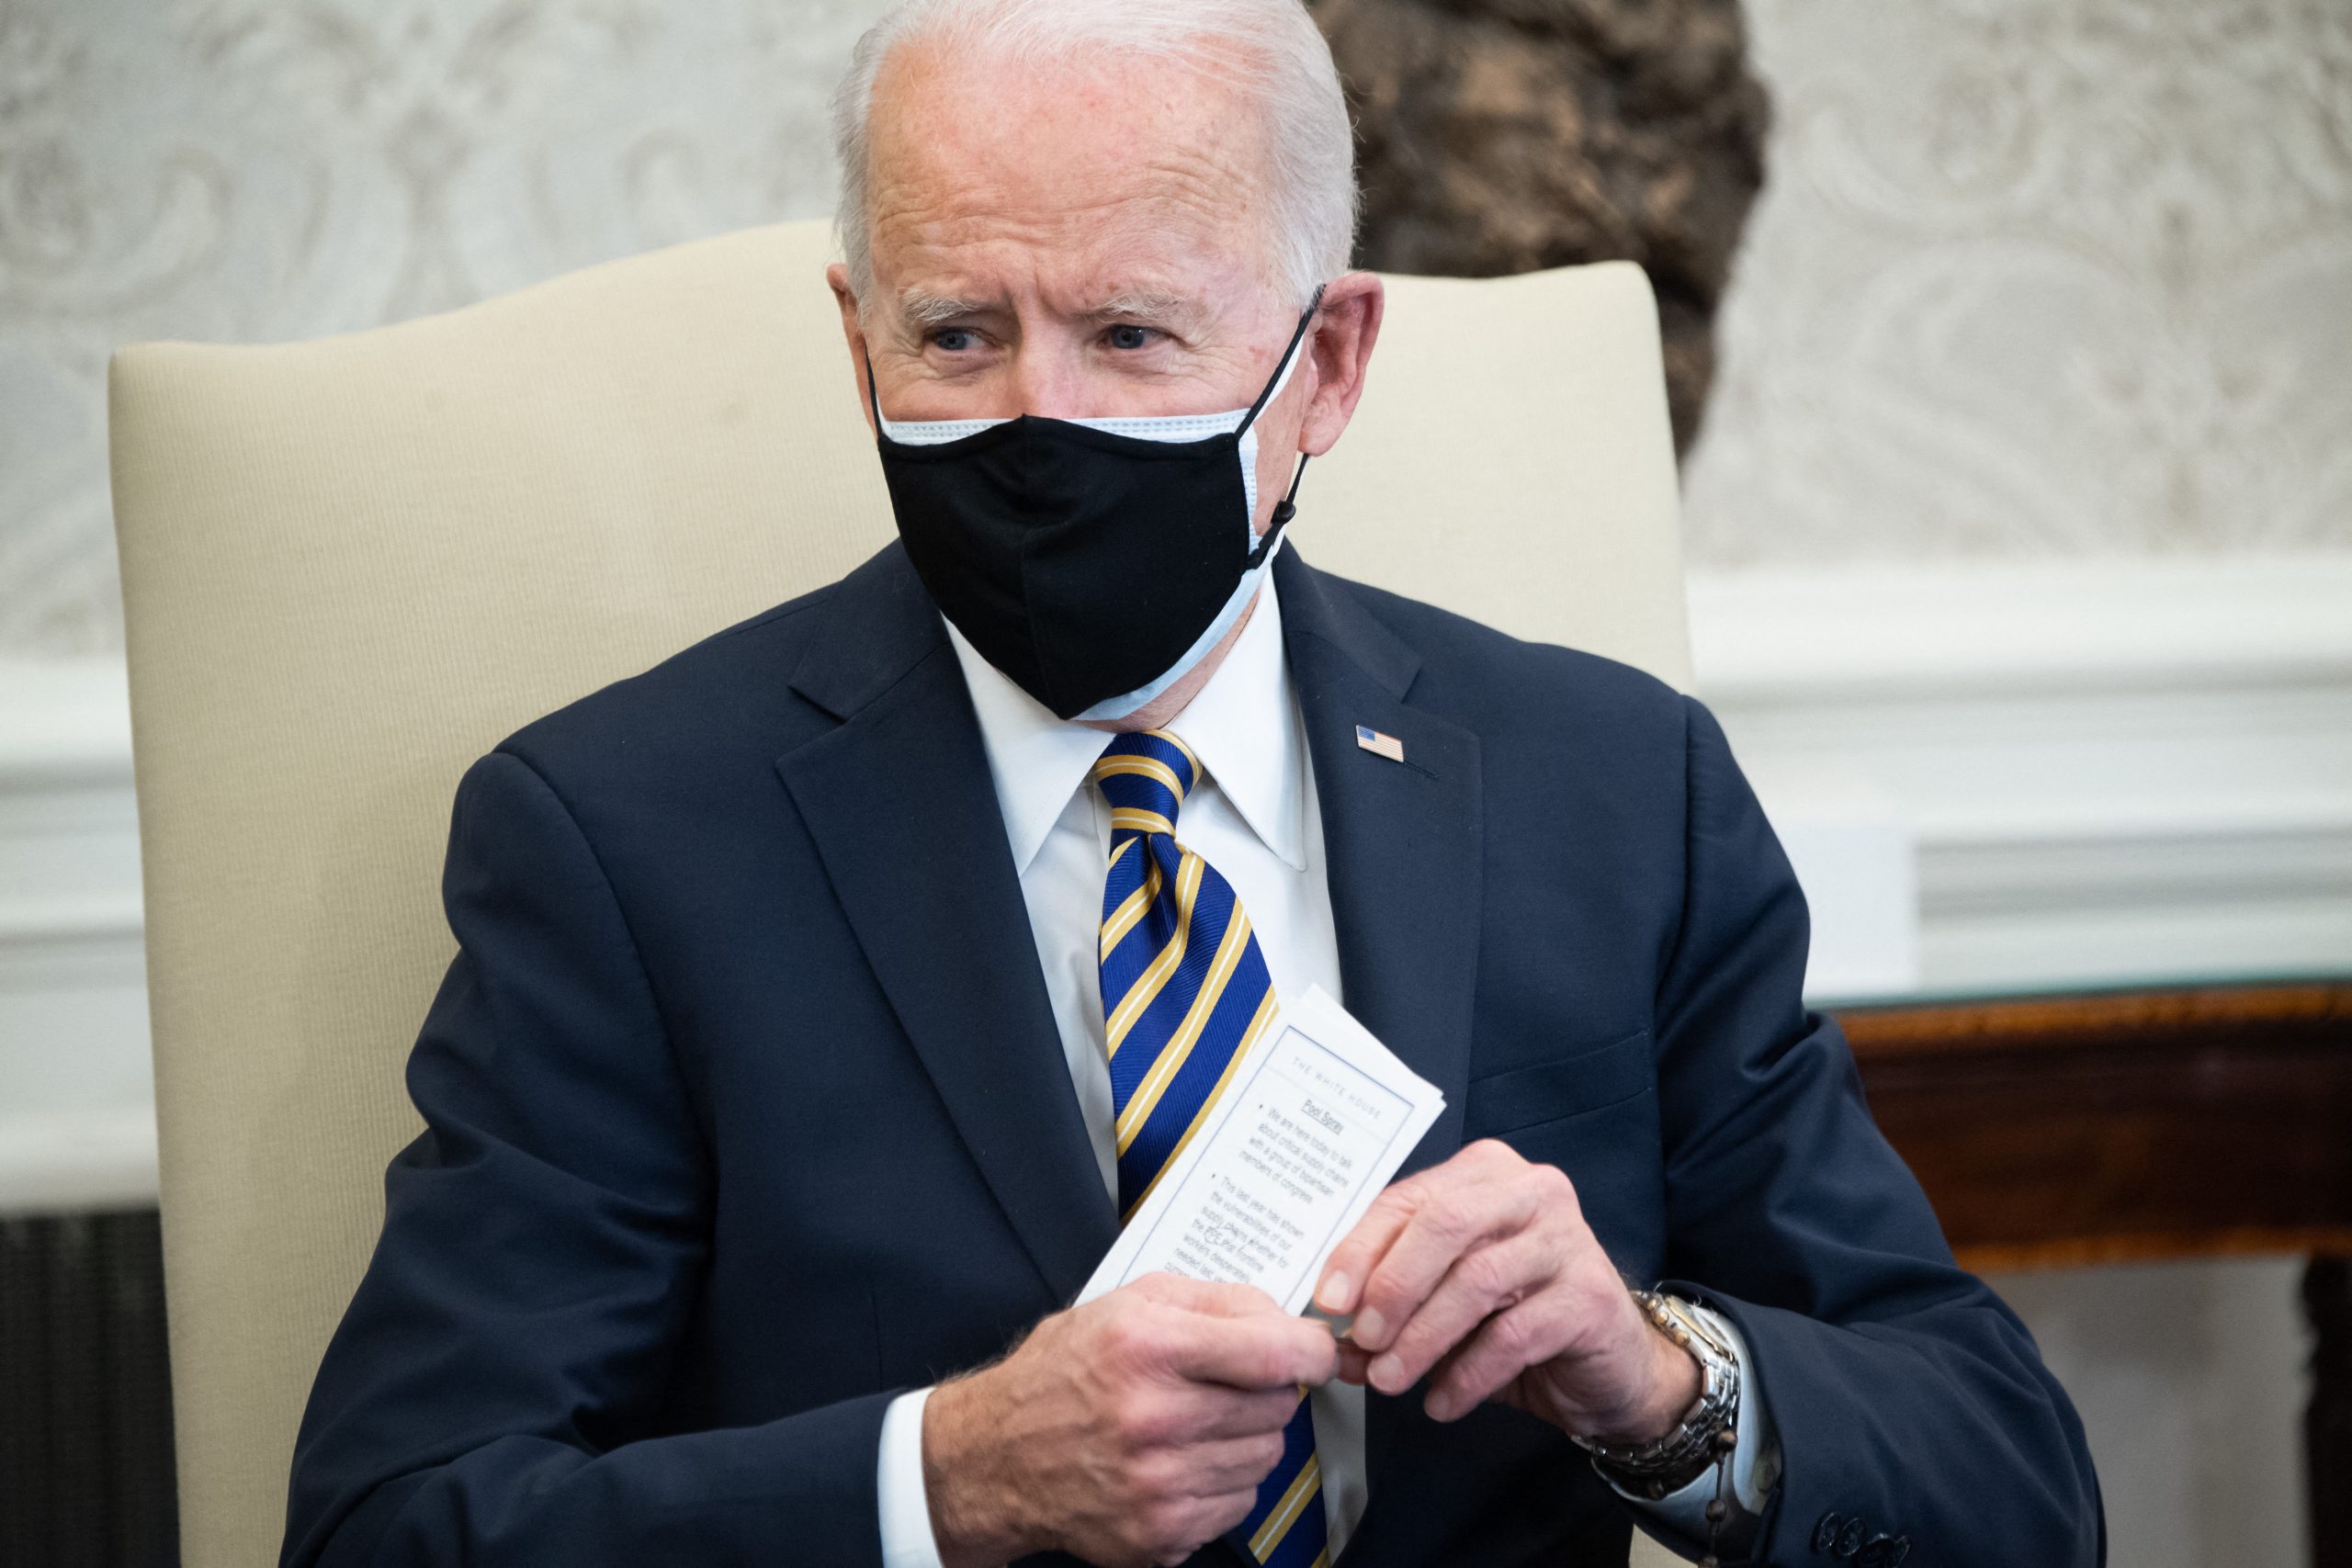 Joe Biden urges US Congress to pass voter right laws ‘soon’